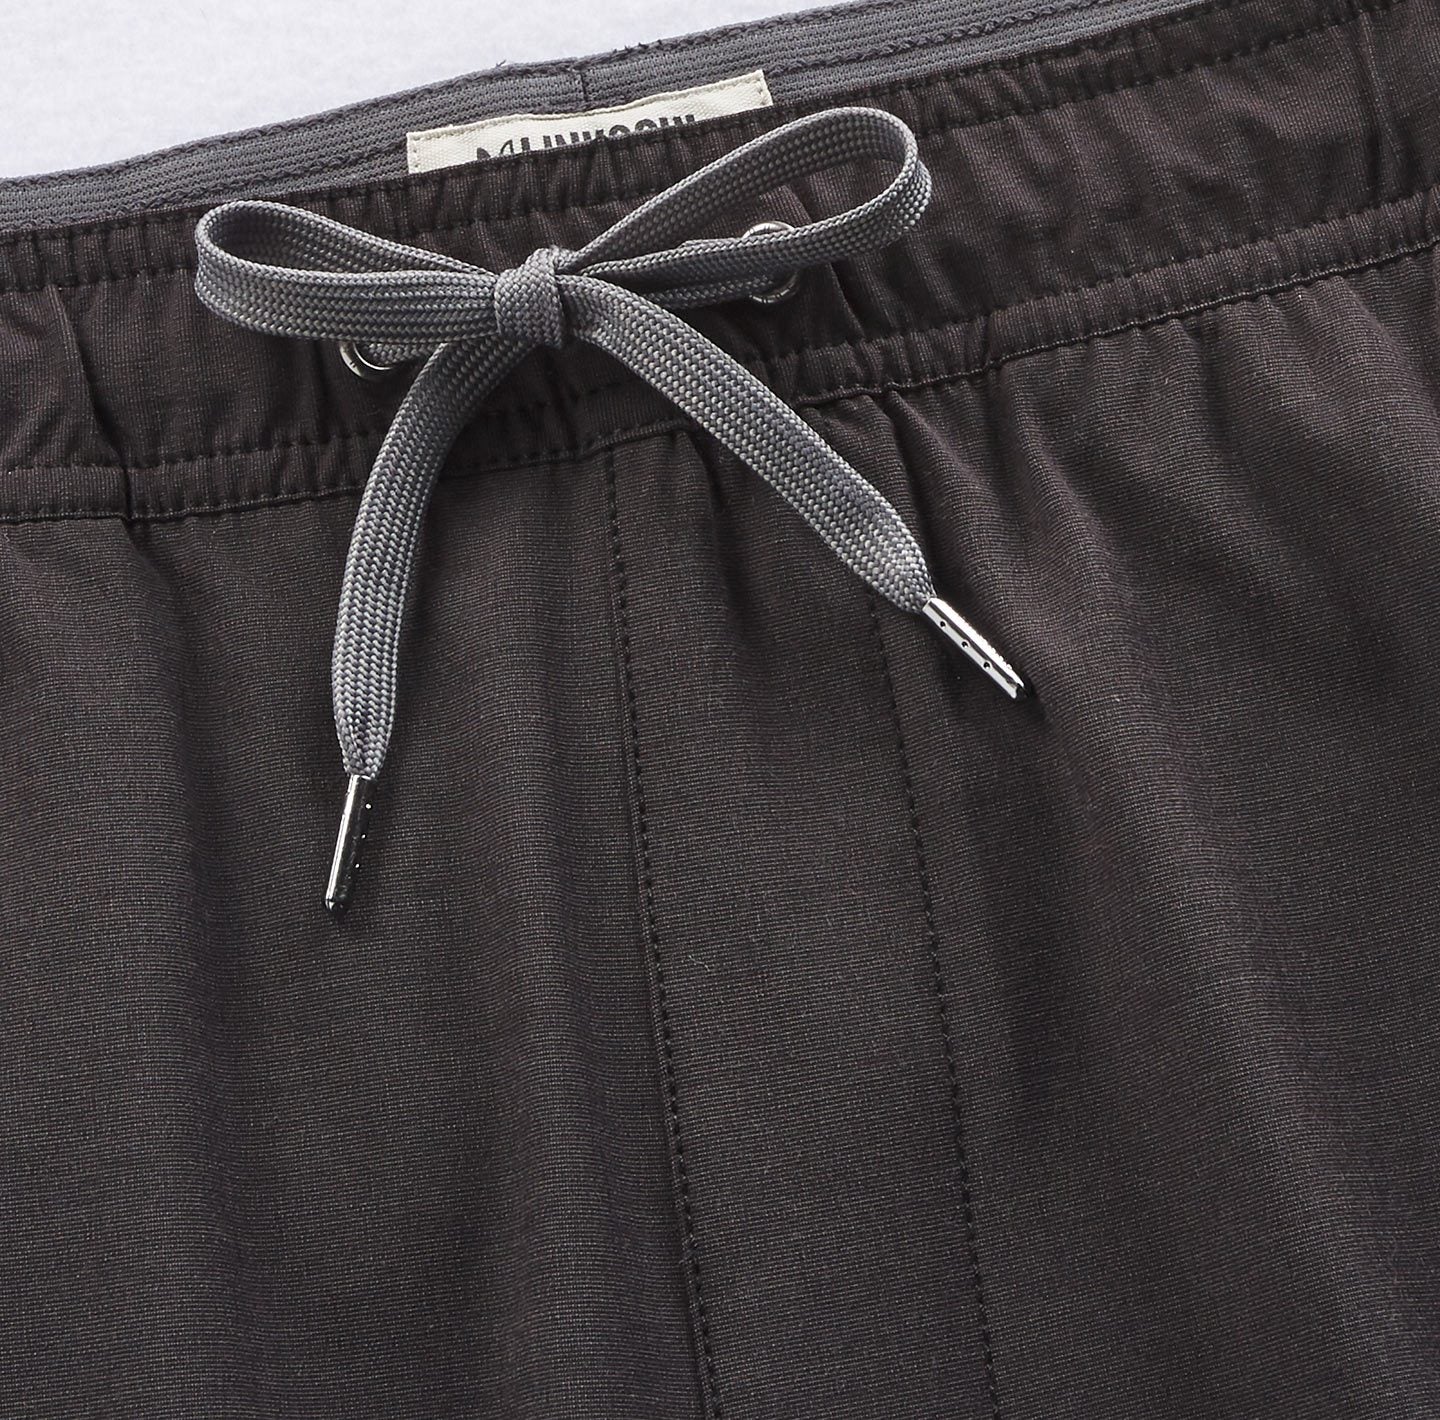 Linksoul Golf Pants Men's Size 36R Tan High Rise Stretch Straight